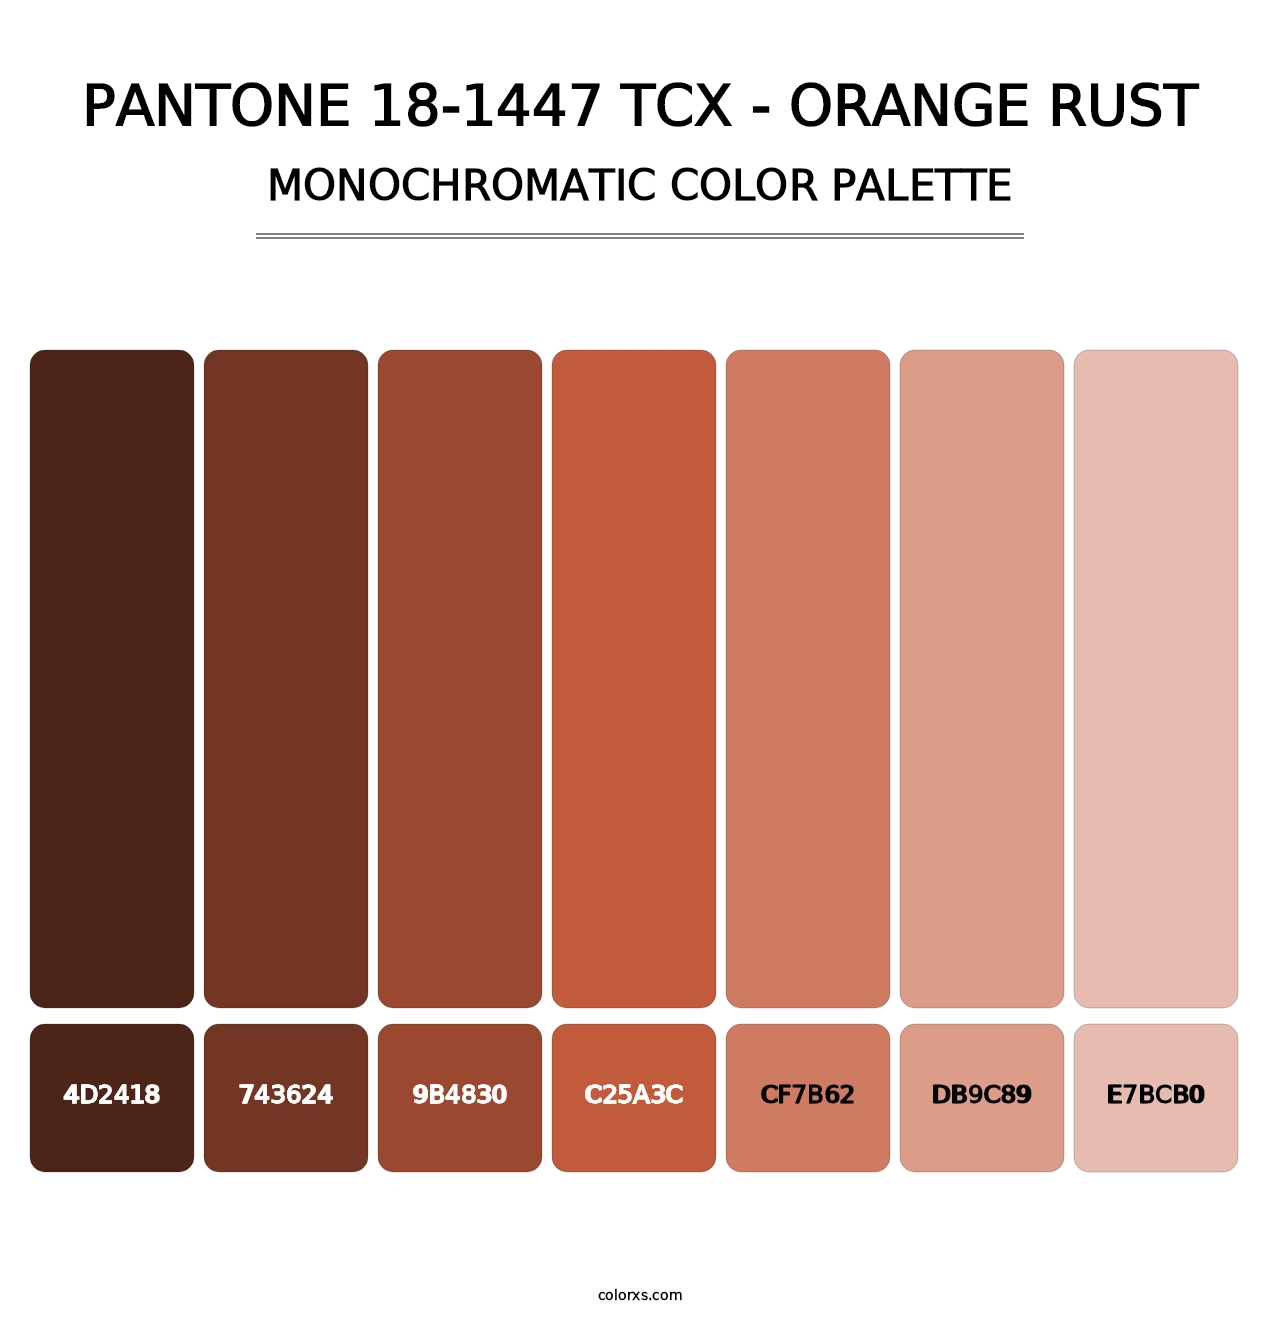 PANTONE 18-1447 TCX - Orange Rust - Monochromatic Color Palette